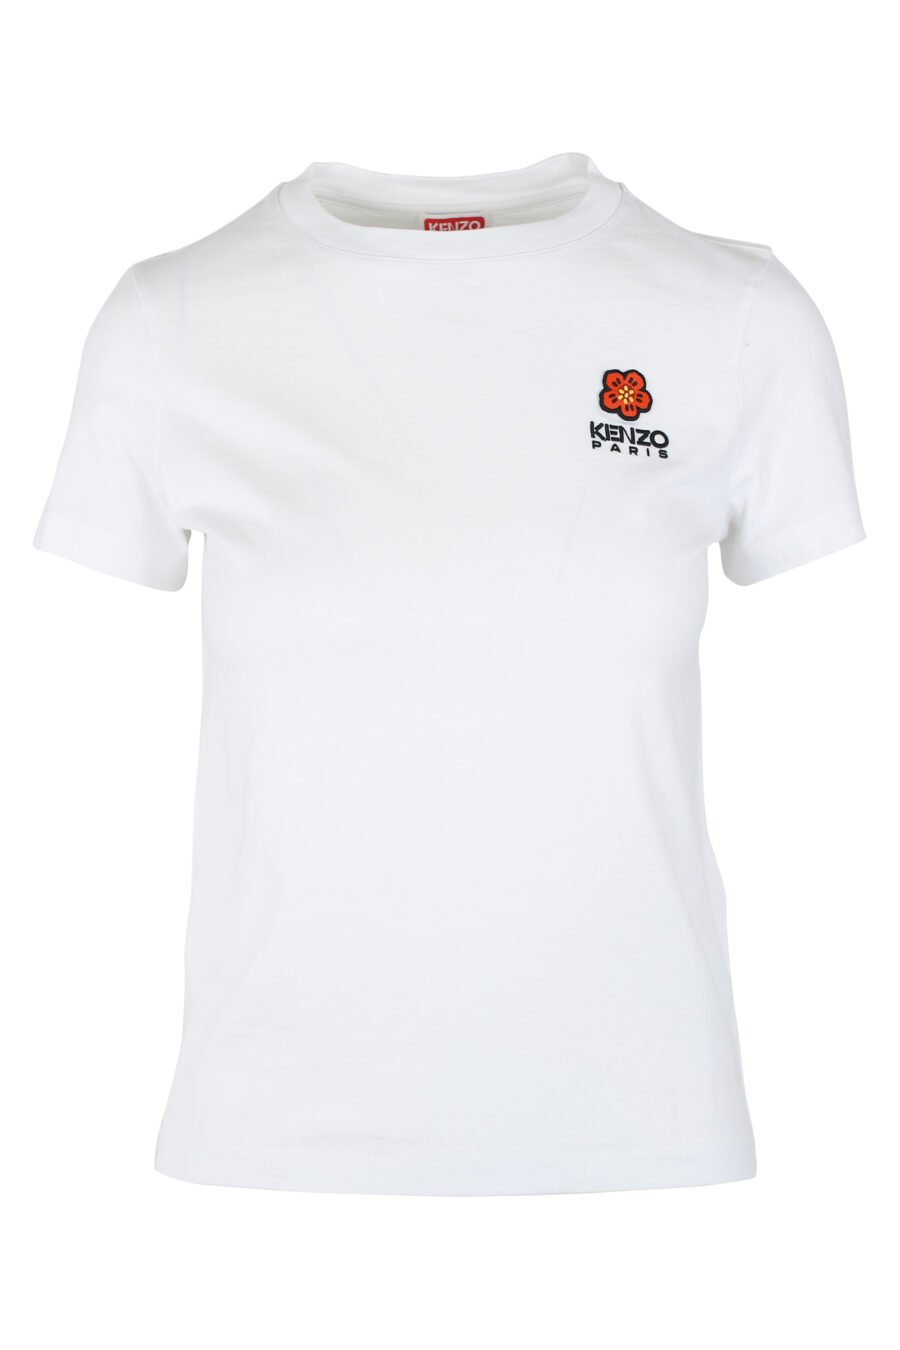 Camiseta blanca con minilogo rojo - IMG 9526